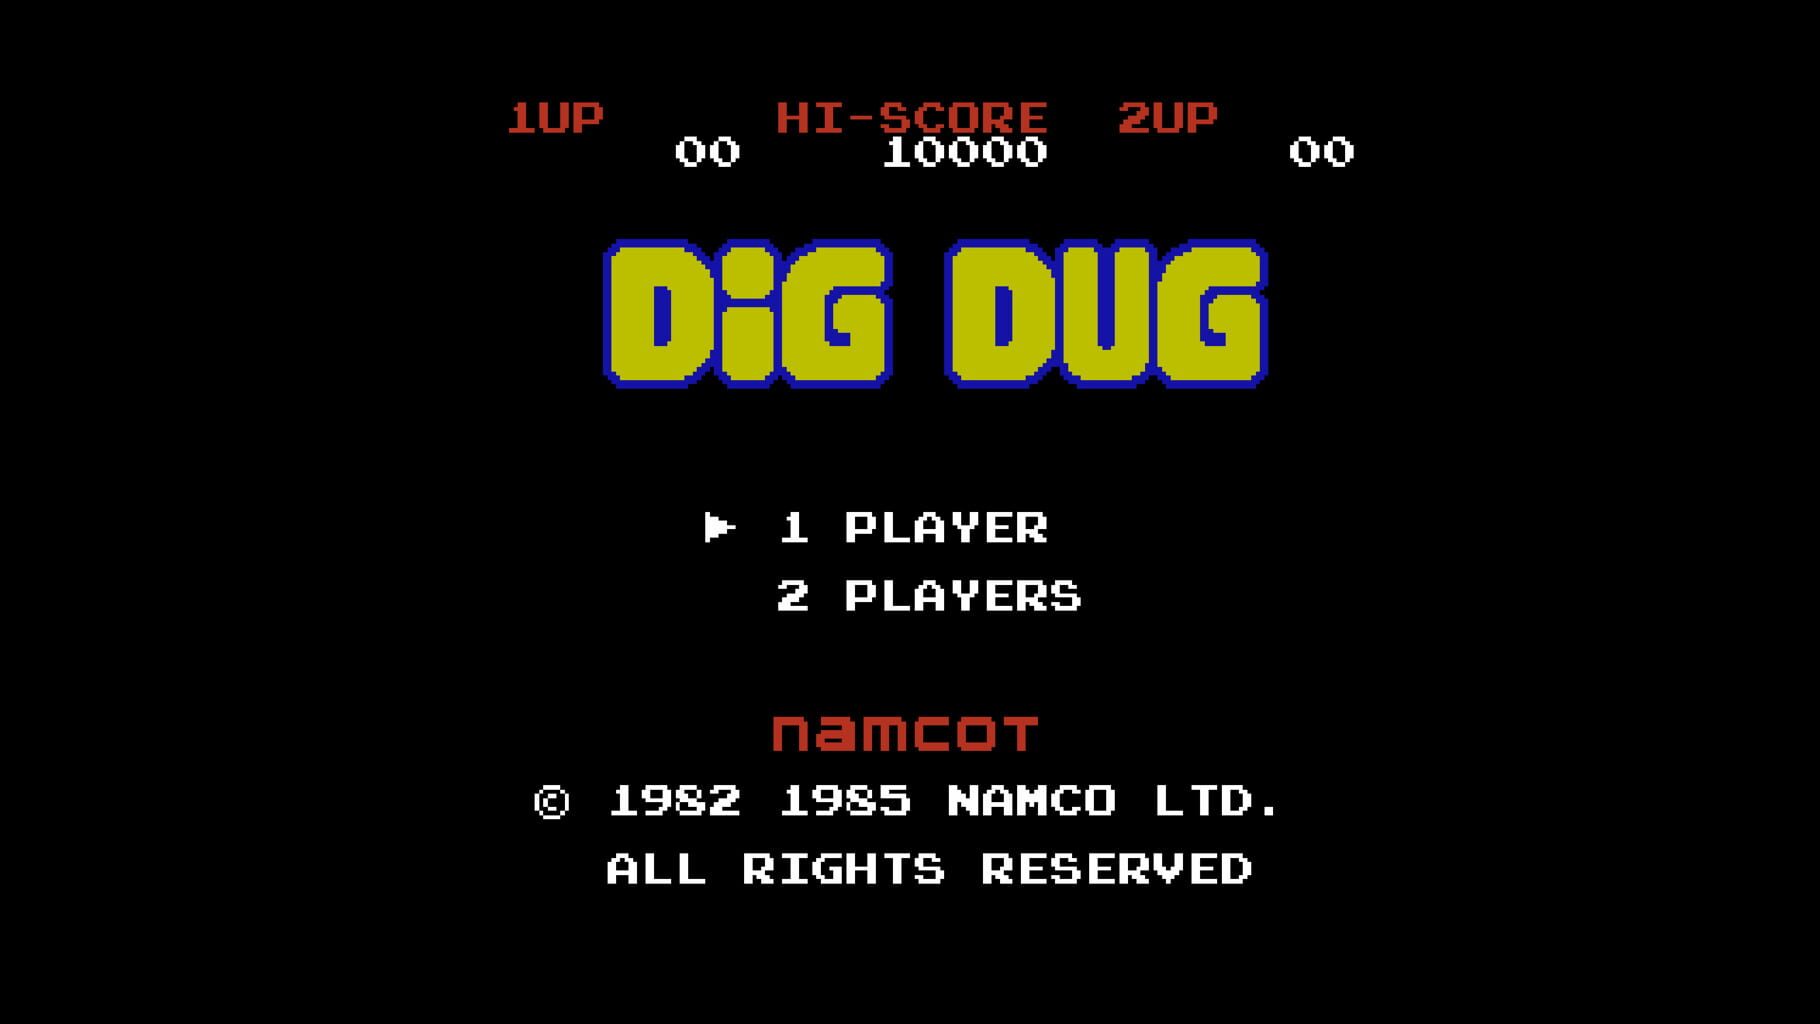 Dig dug exe. Dig dug NES. Dig dug Денди. Игра Денди dig dug (Rus). Dig dug перевод.